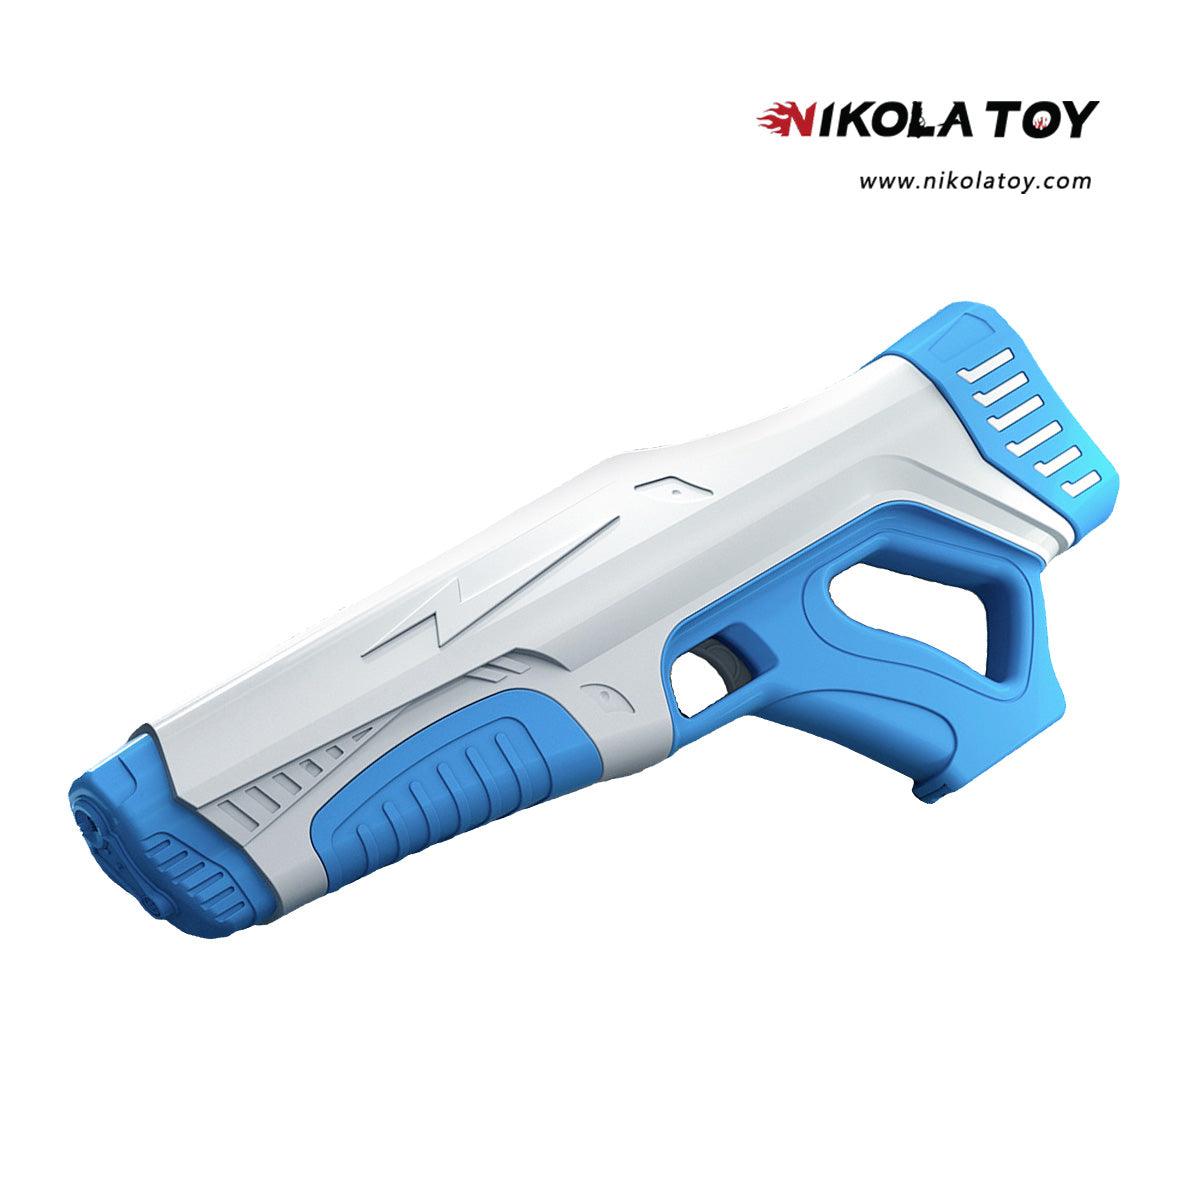 Lightning pulse fully automatic water gun - Nikola Toy